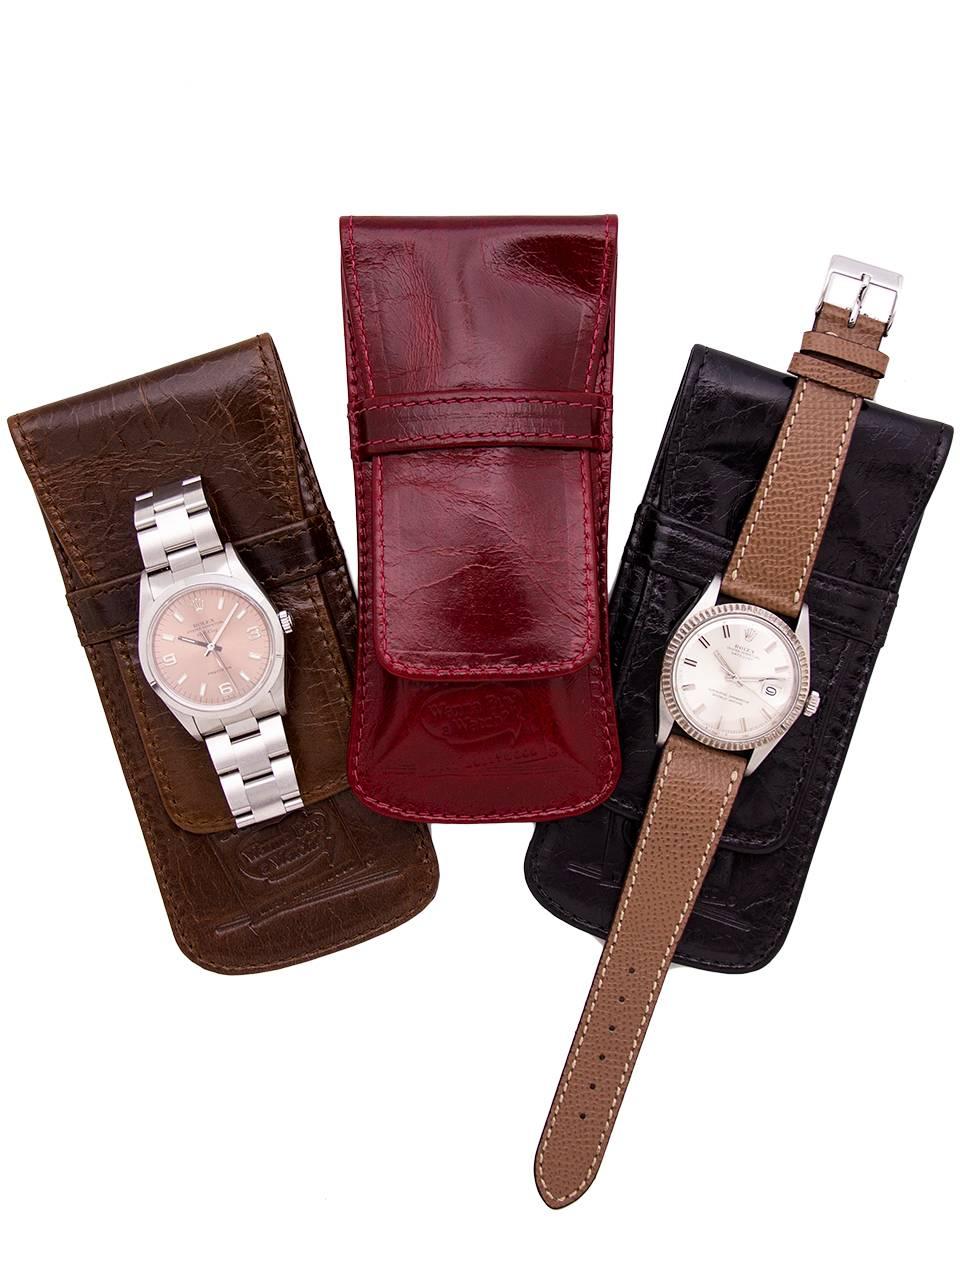 Men's Universal Geneve stainless steel Manual Wind wristwatch, circa 1950s